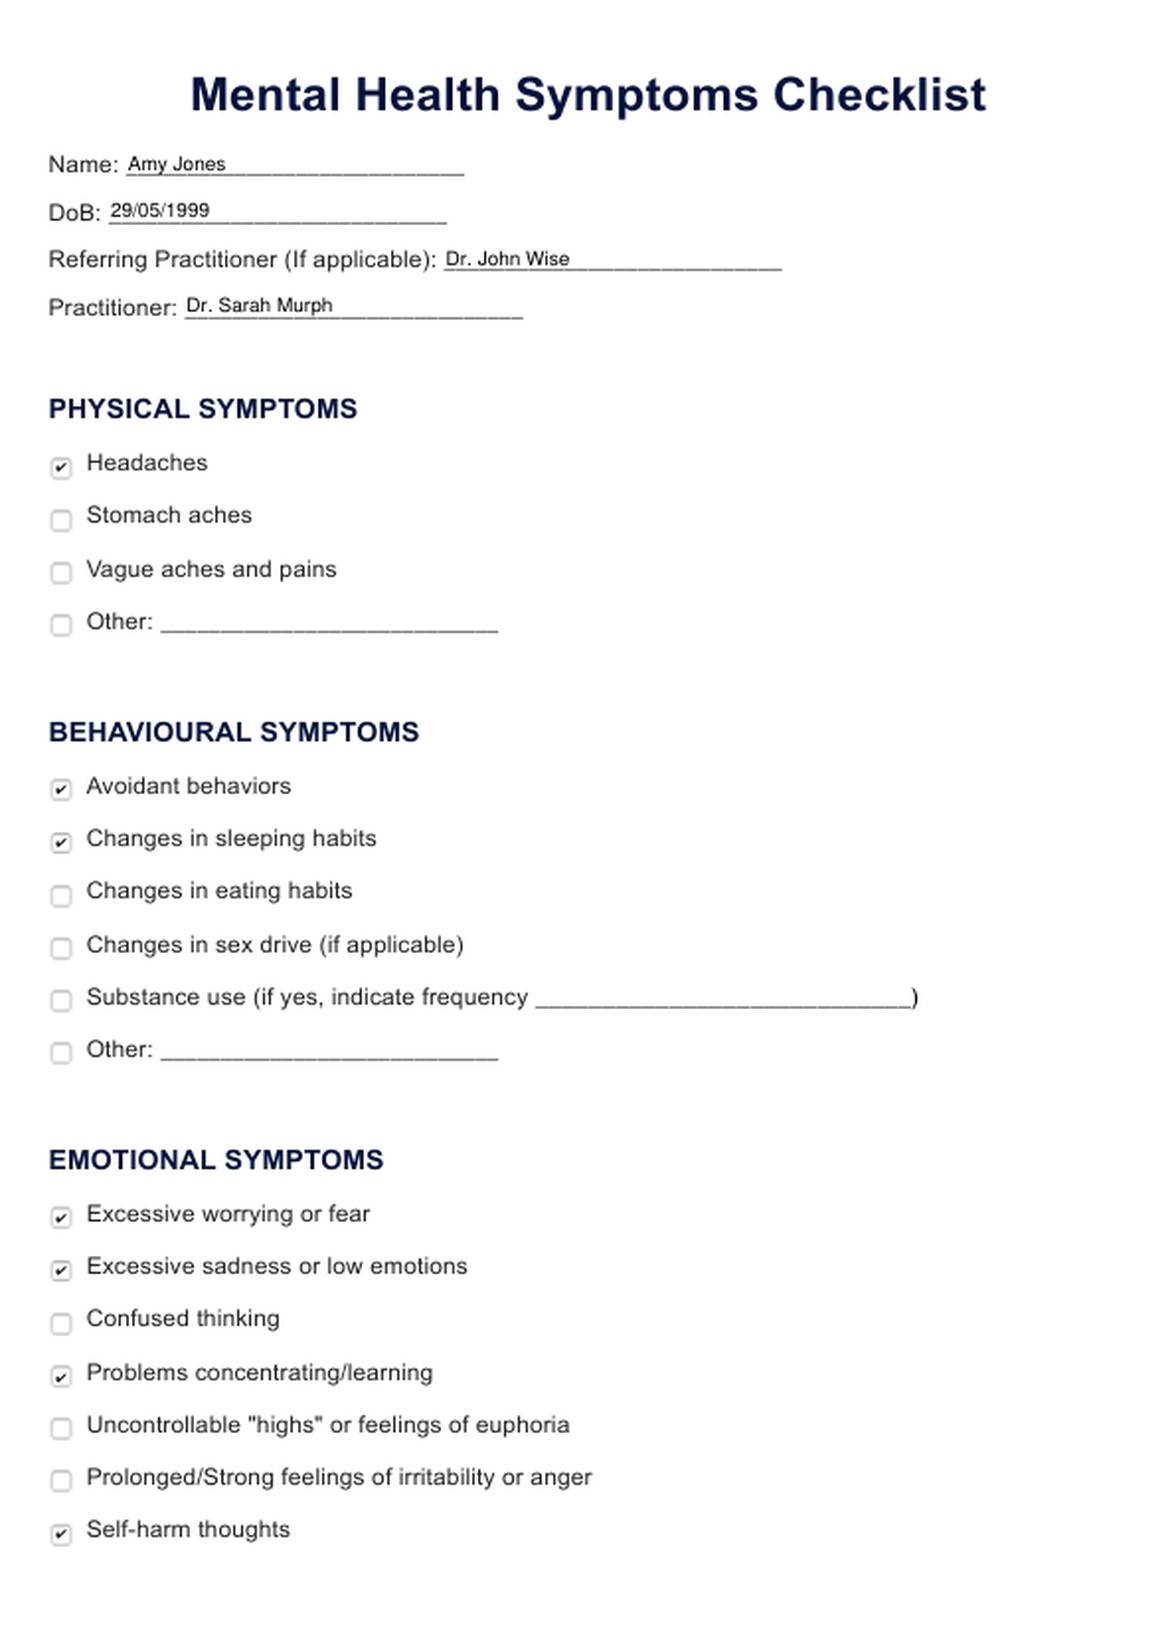 Mental Health Symptoms PDF Example